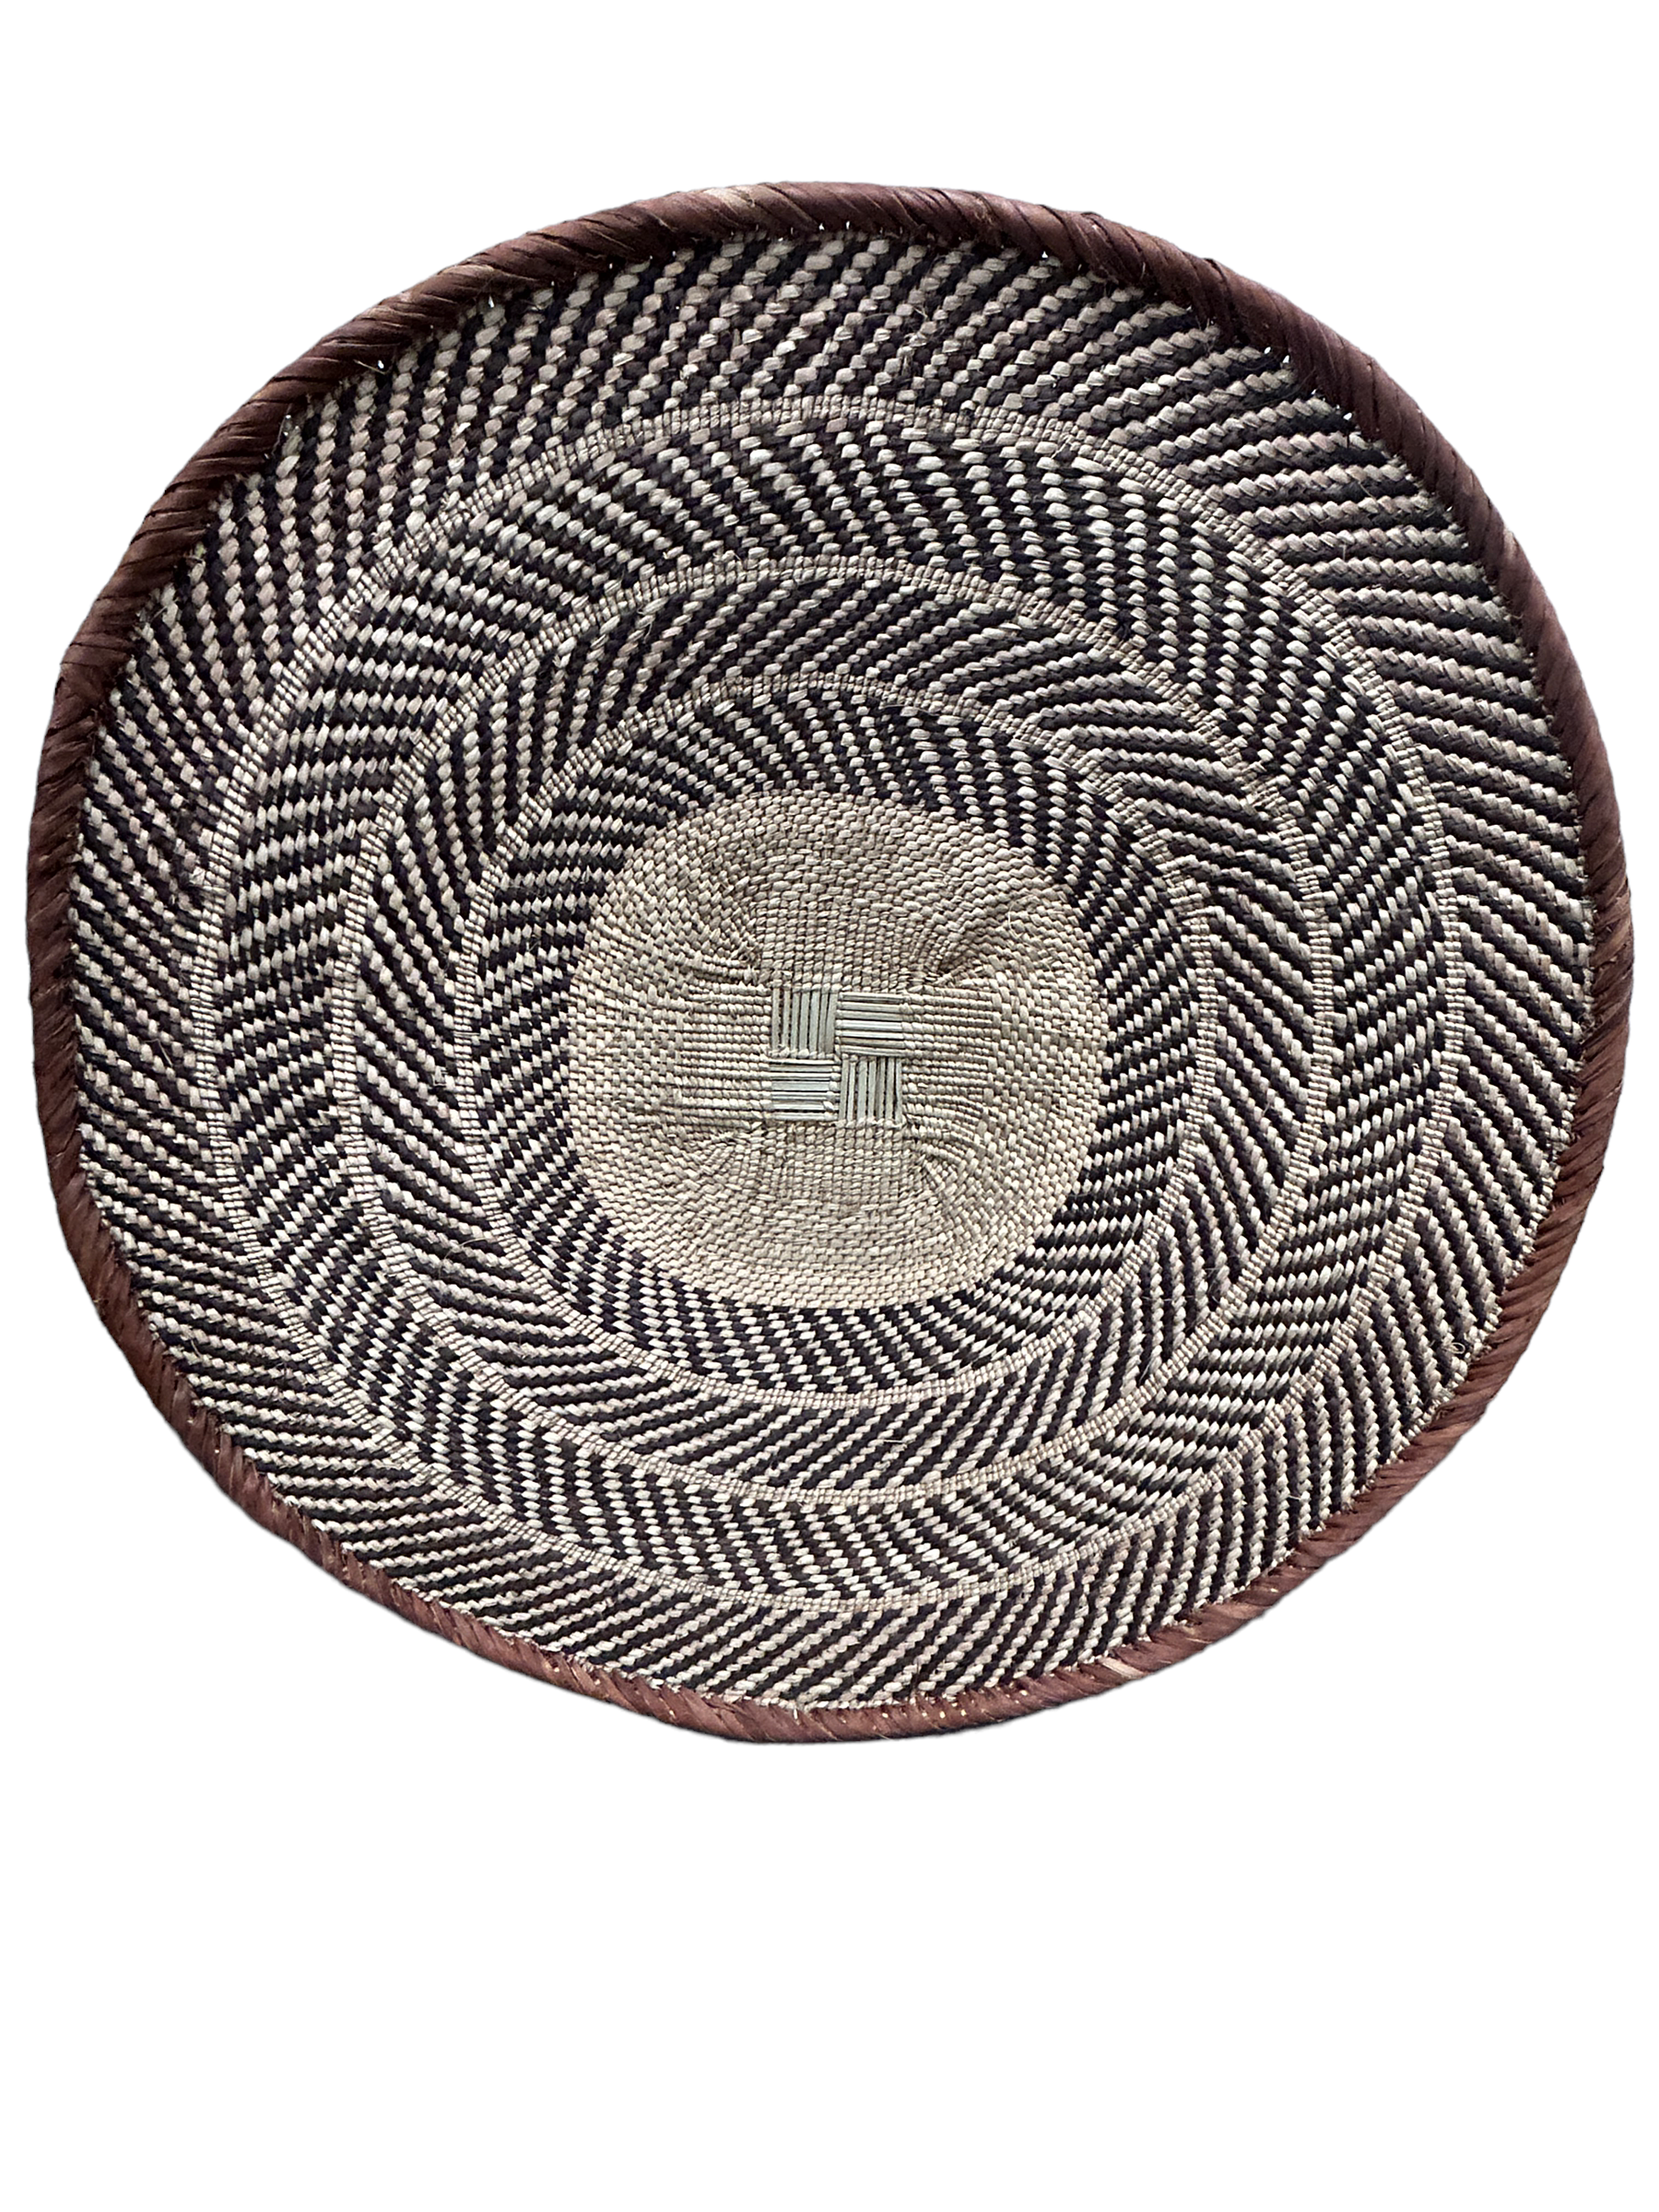 botanicalboysuk Tonga Basket Natural (60-08)